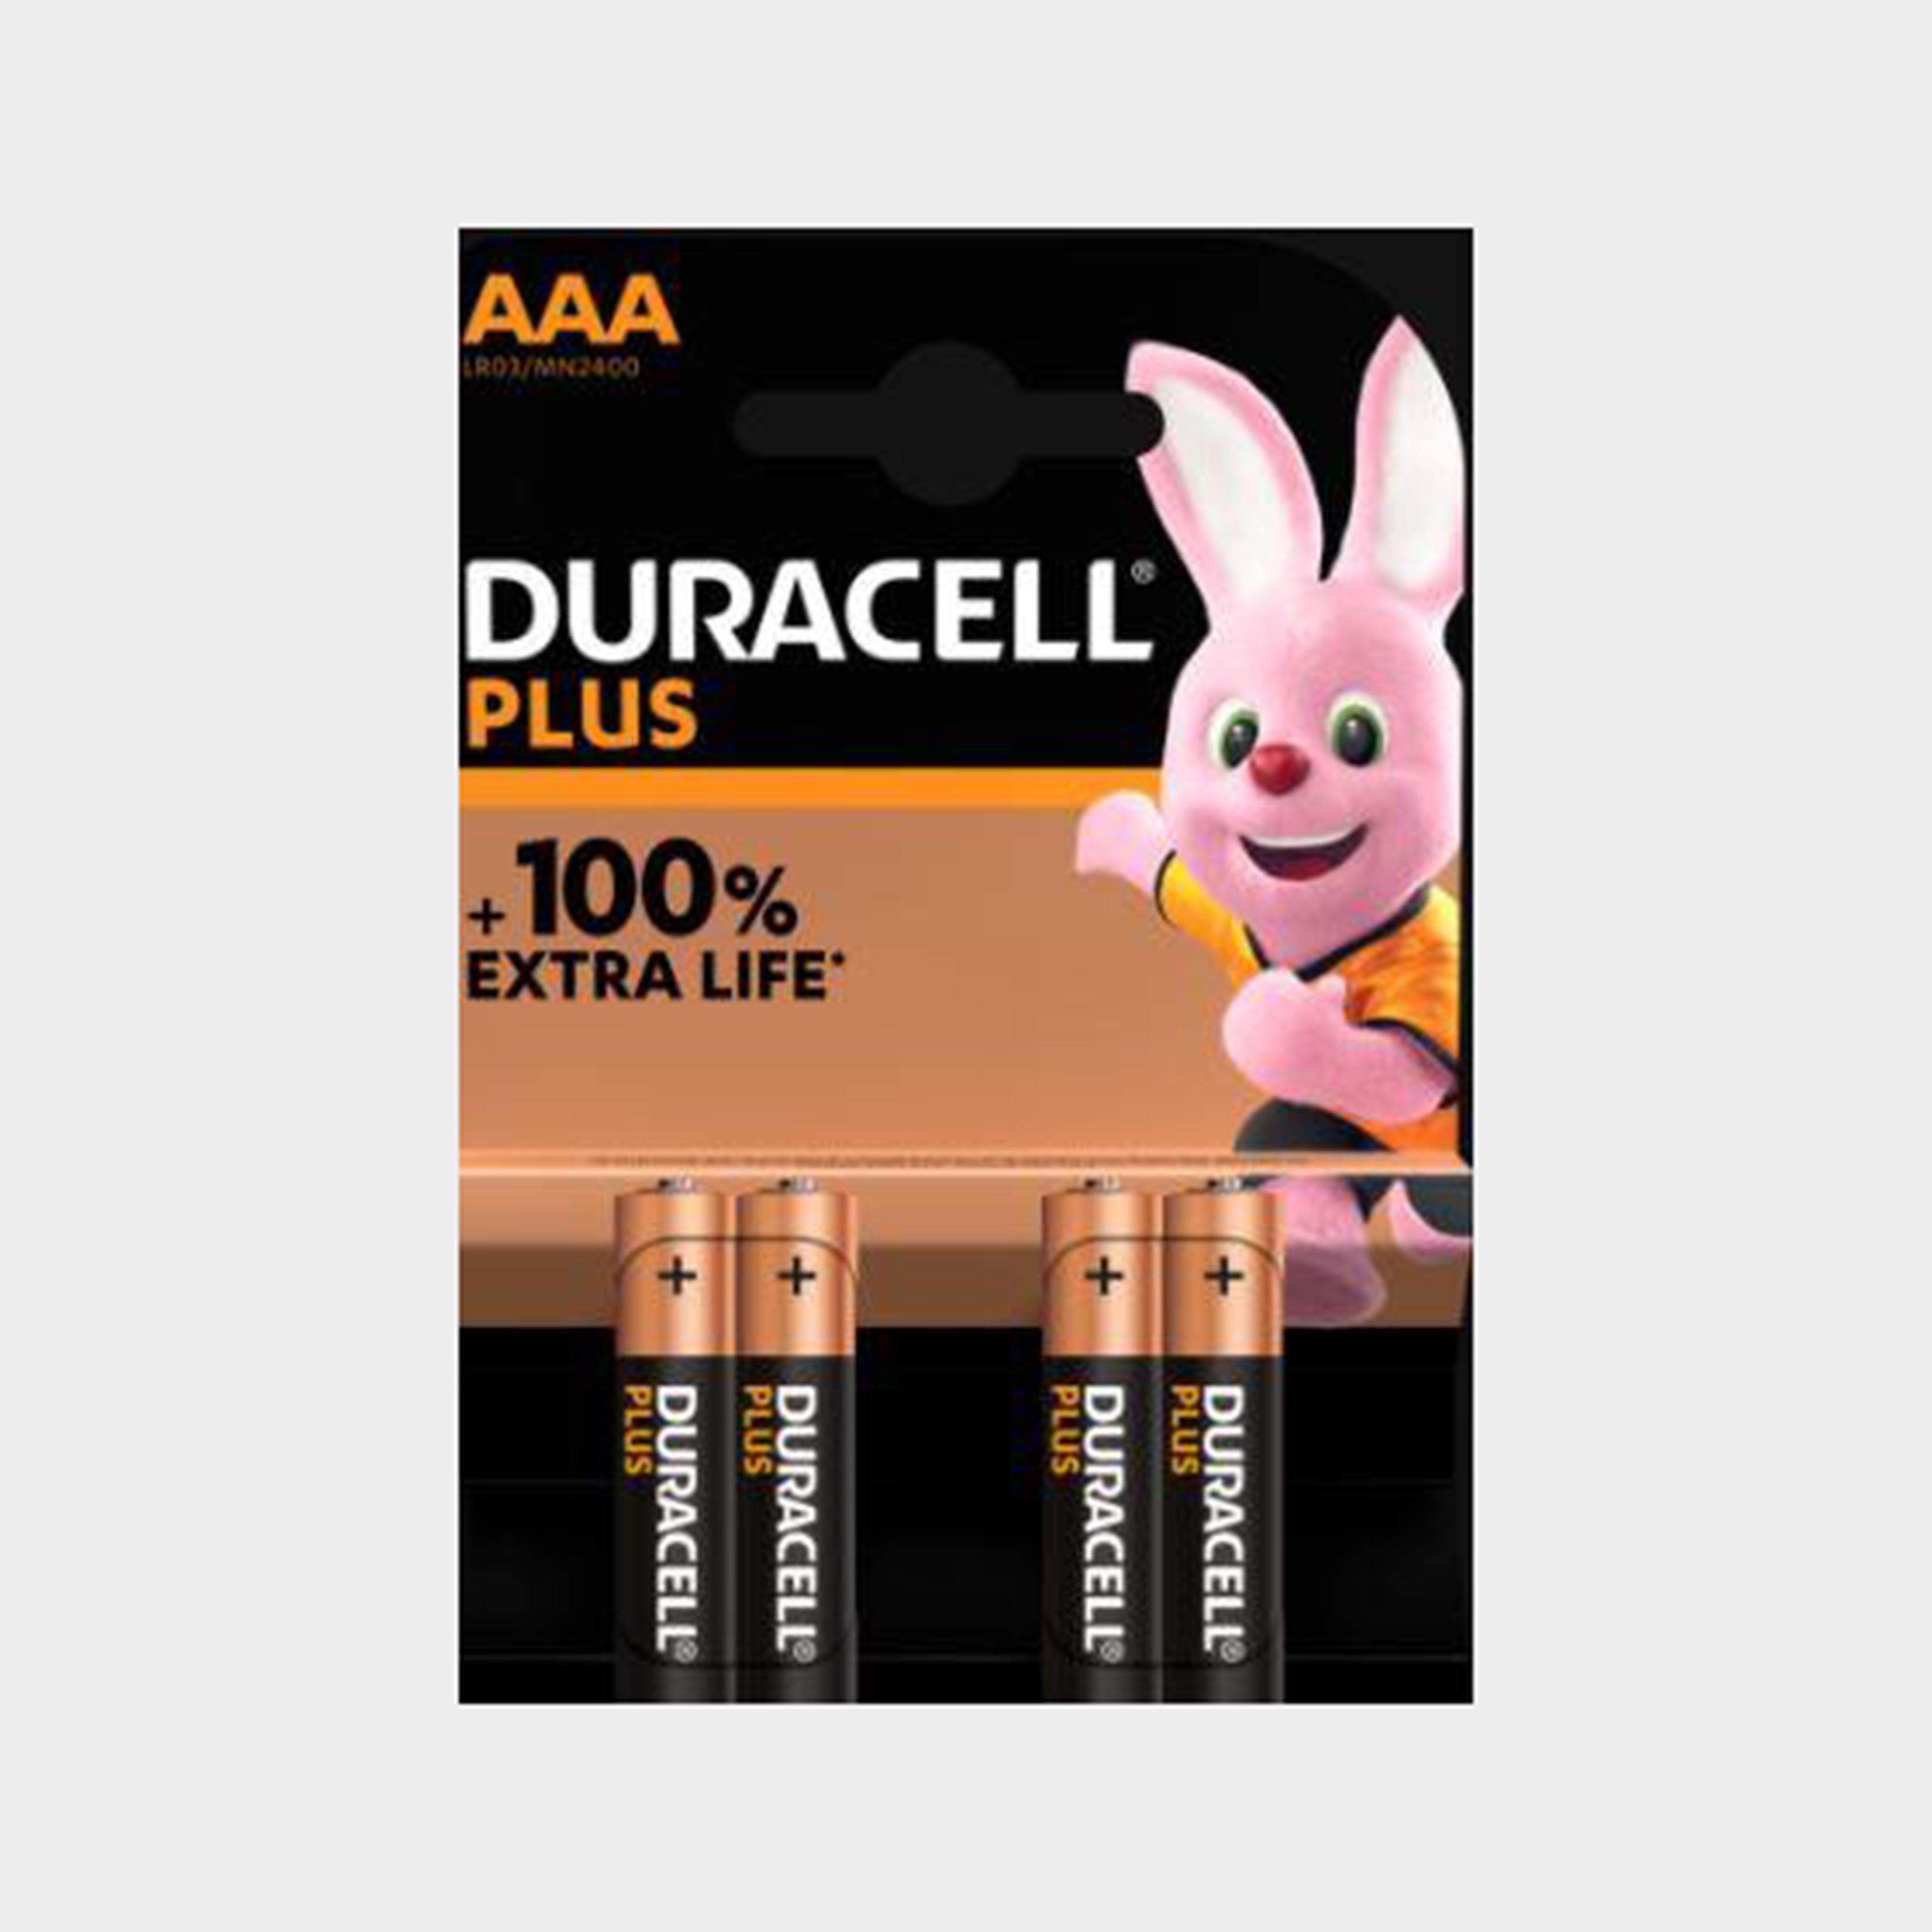 Duracell Aaa Plus 100 Batteries (4 Pack) - Black, Black